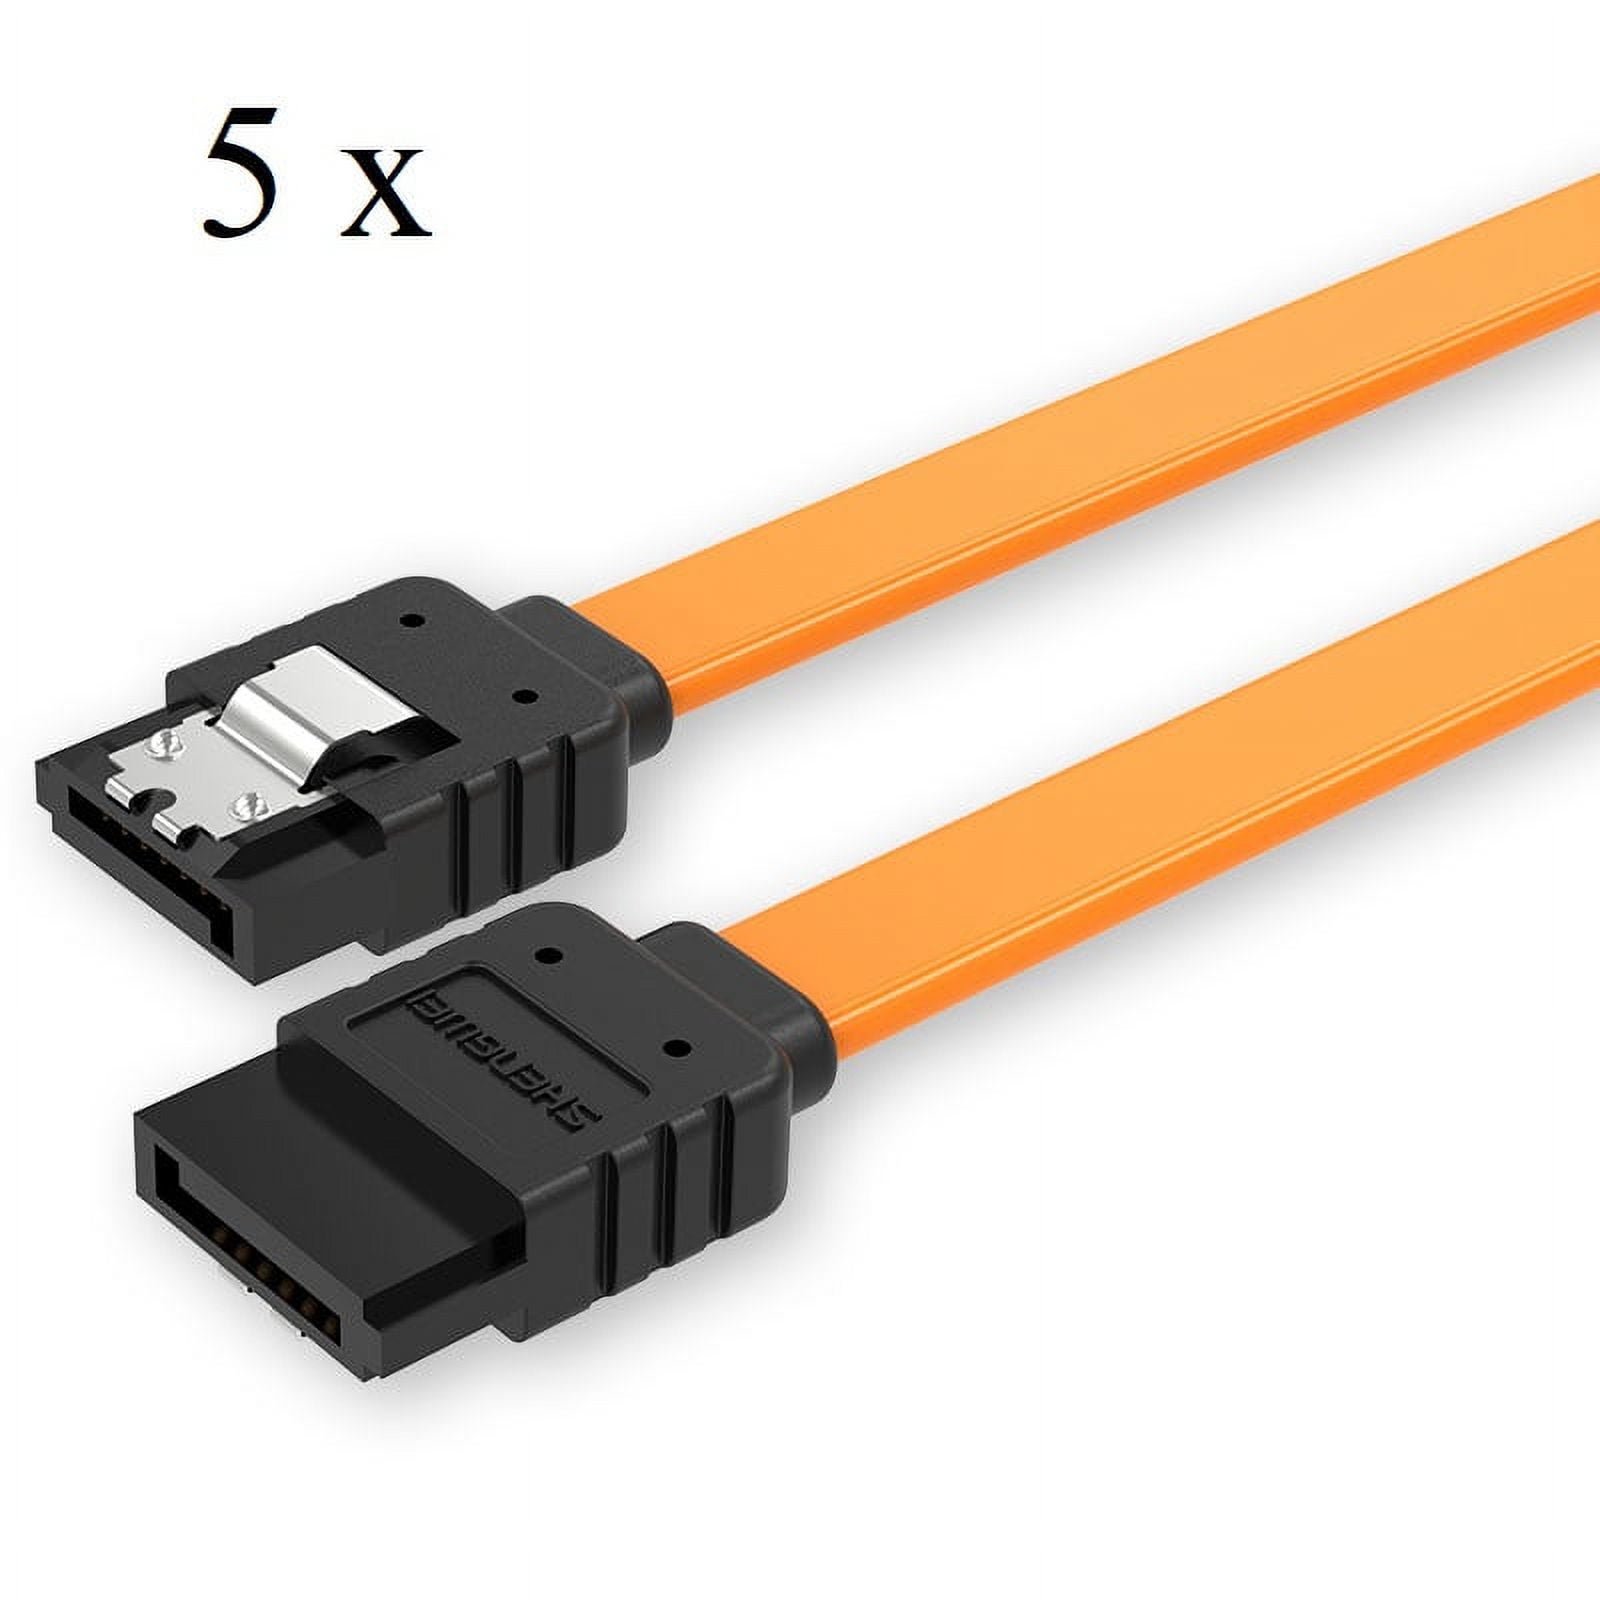 5 x 18inch SATA 3.0 III SATA3 SATAiii 6Gb/s Data Cable Wire 50cm for HDD  Hard Drive SSD- Orange 